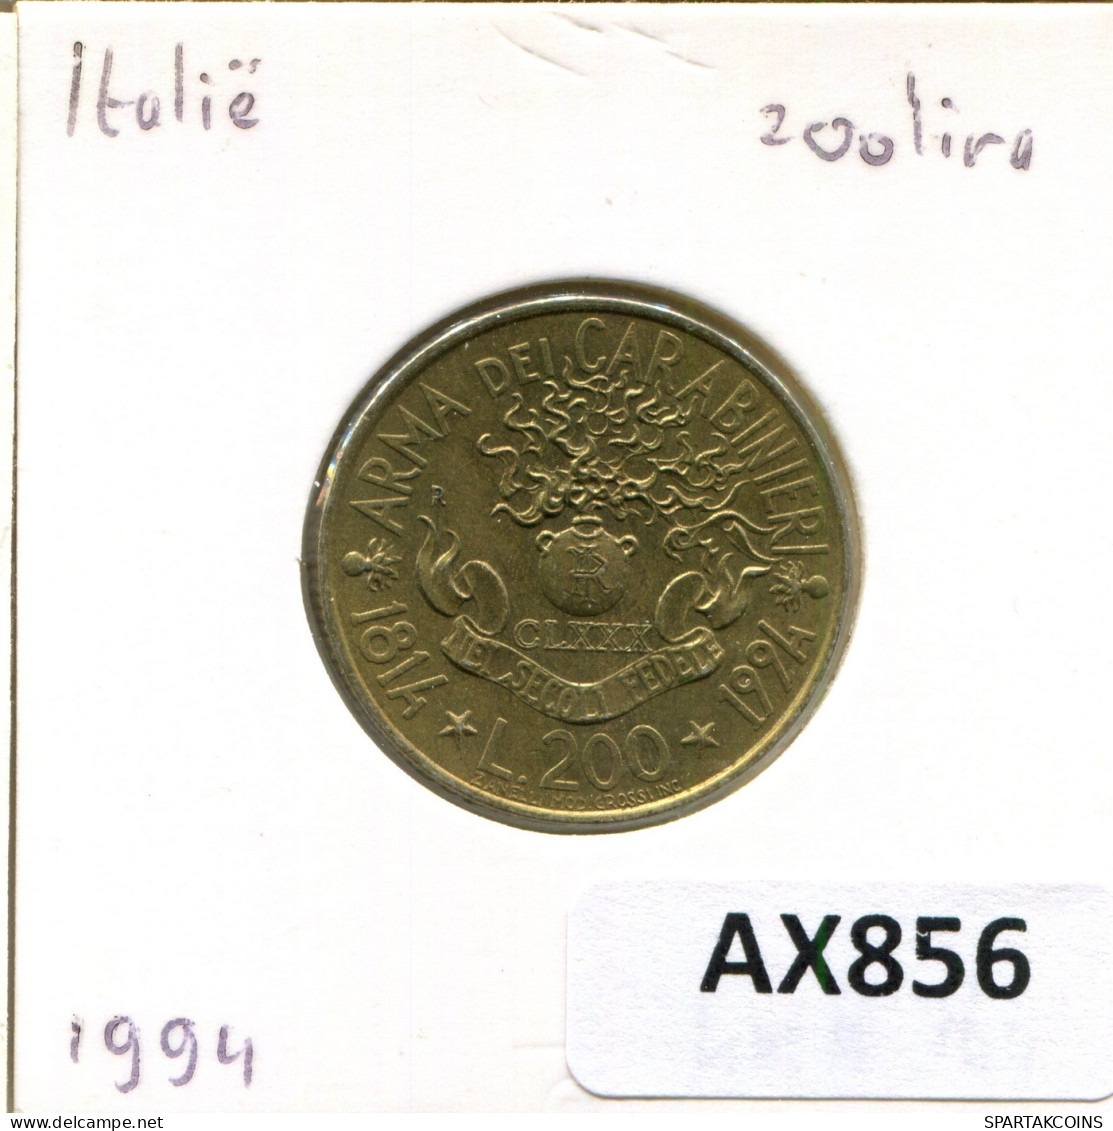 200 LIRE 1994 ITALY Coin #AX856.U.A - 200 Liras